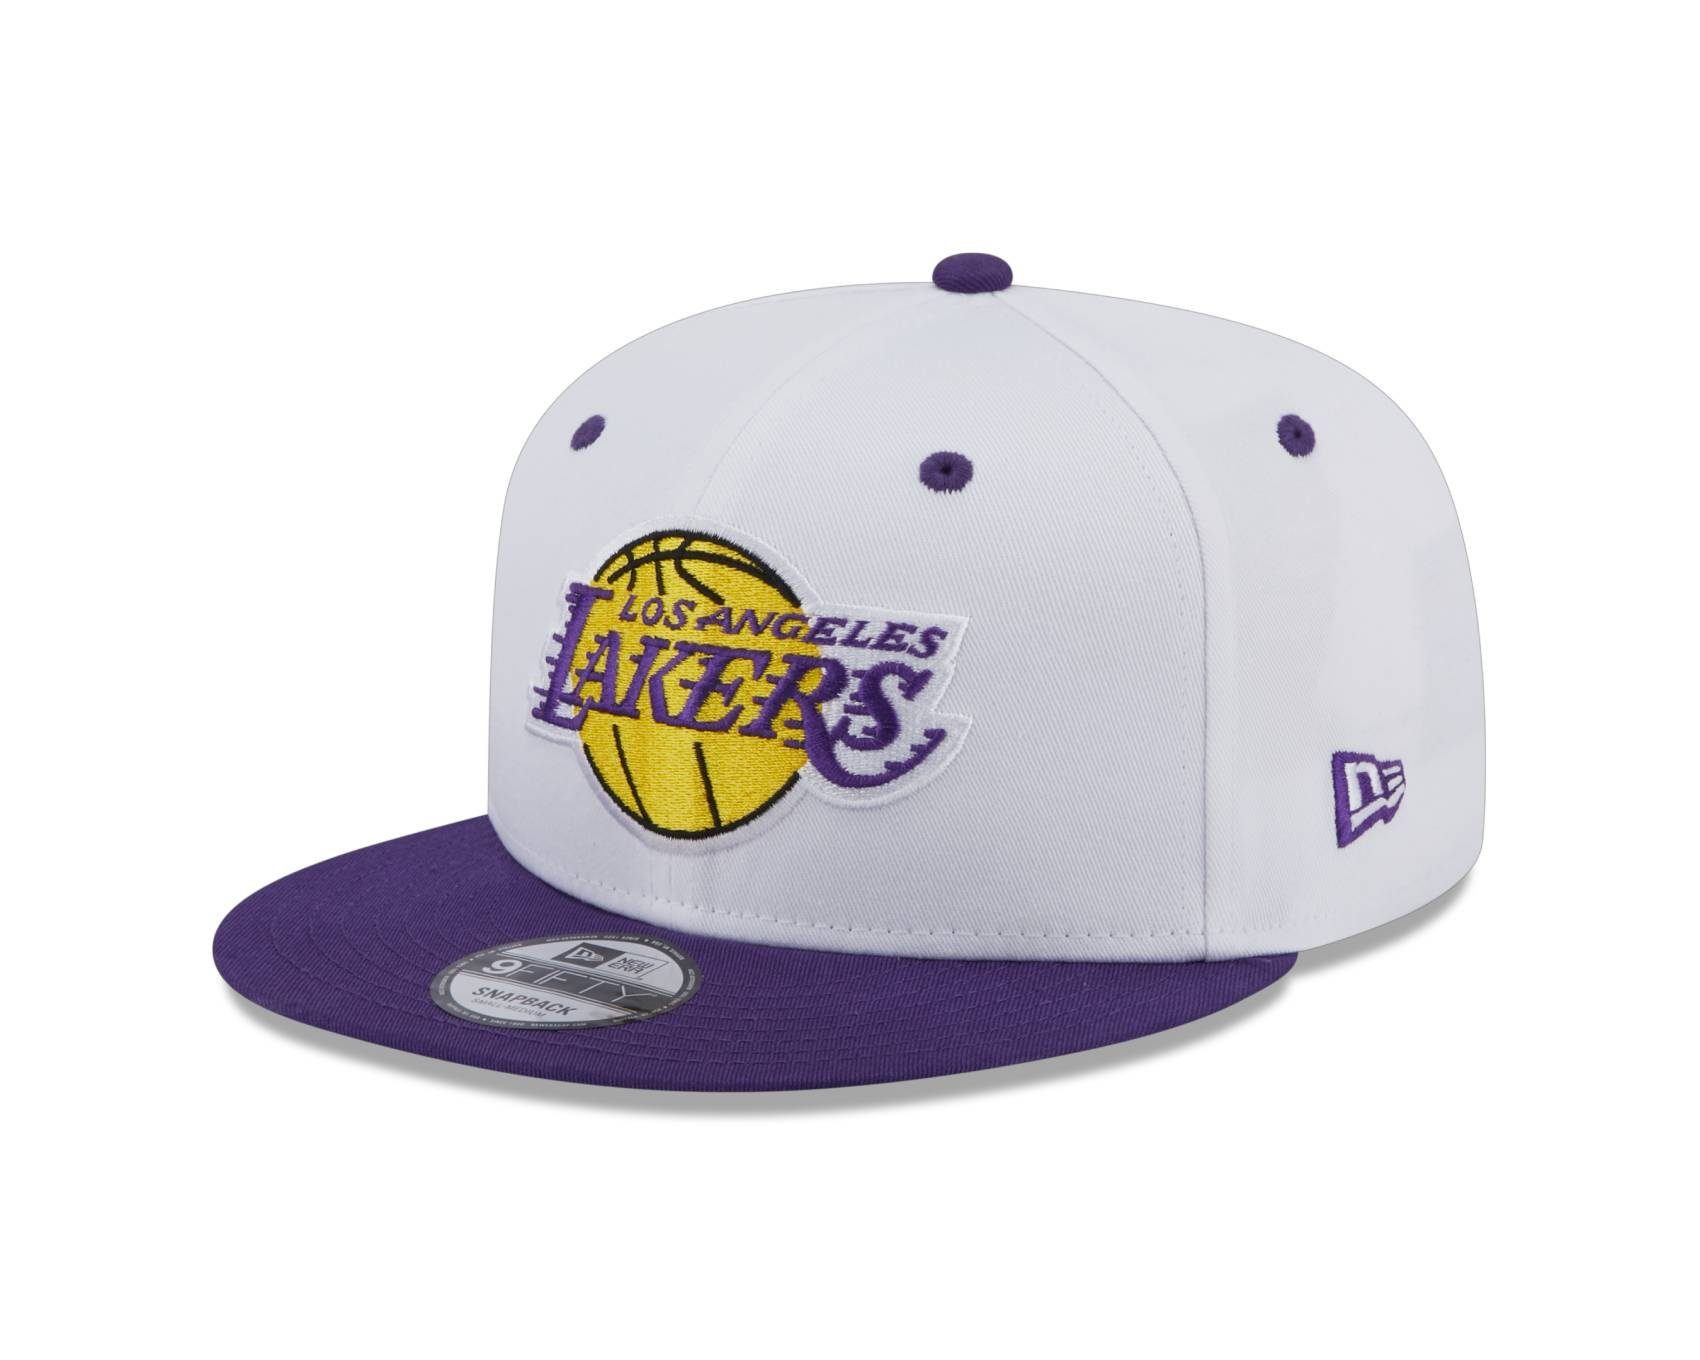 Crown Era New (1-St) Era Angeles Los White Lakers New Cap 9Fifty Cap Baseball